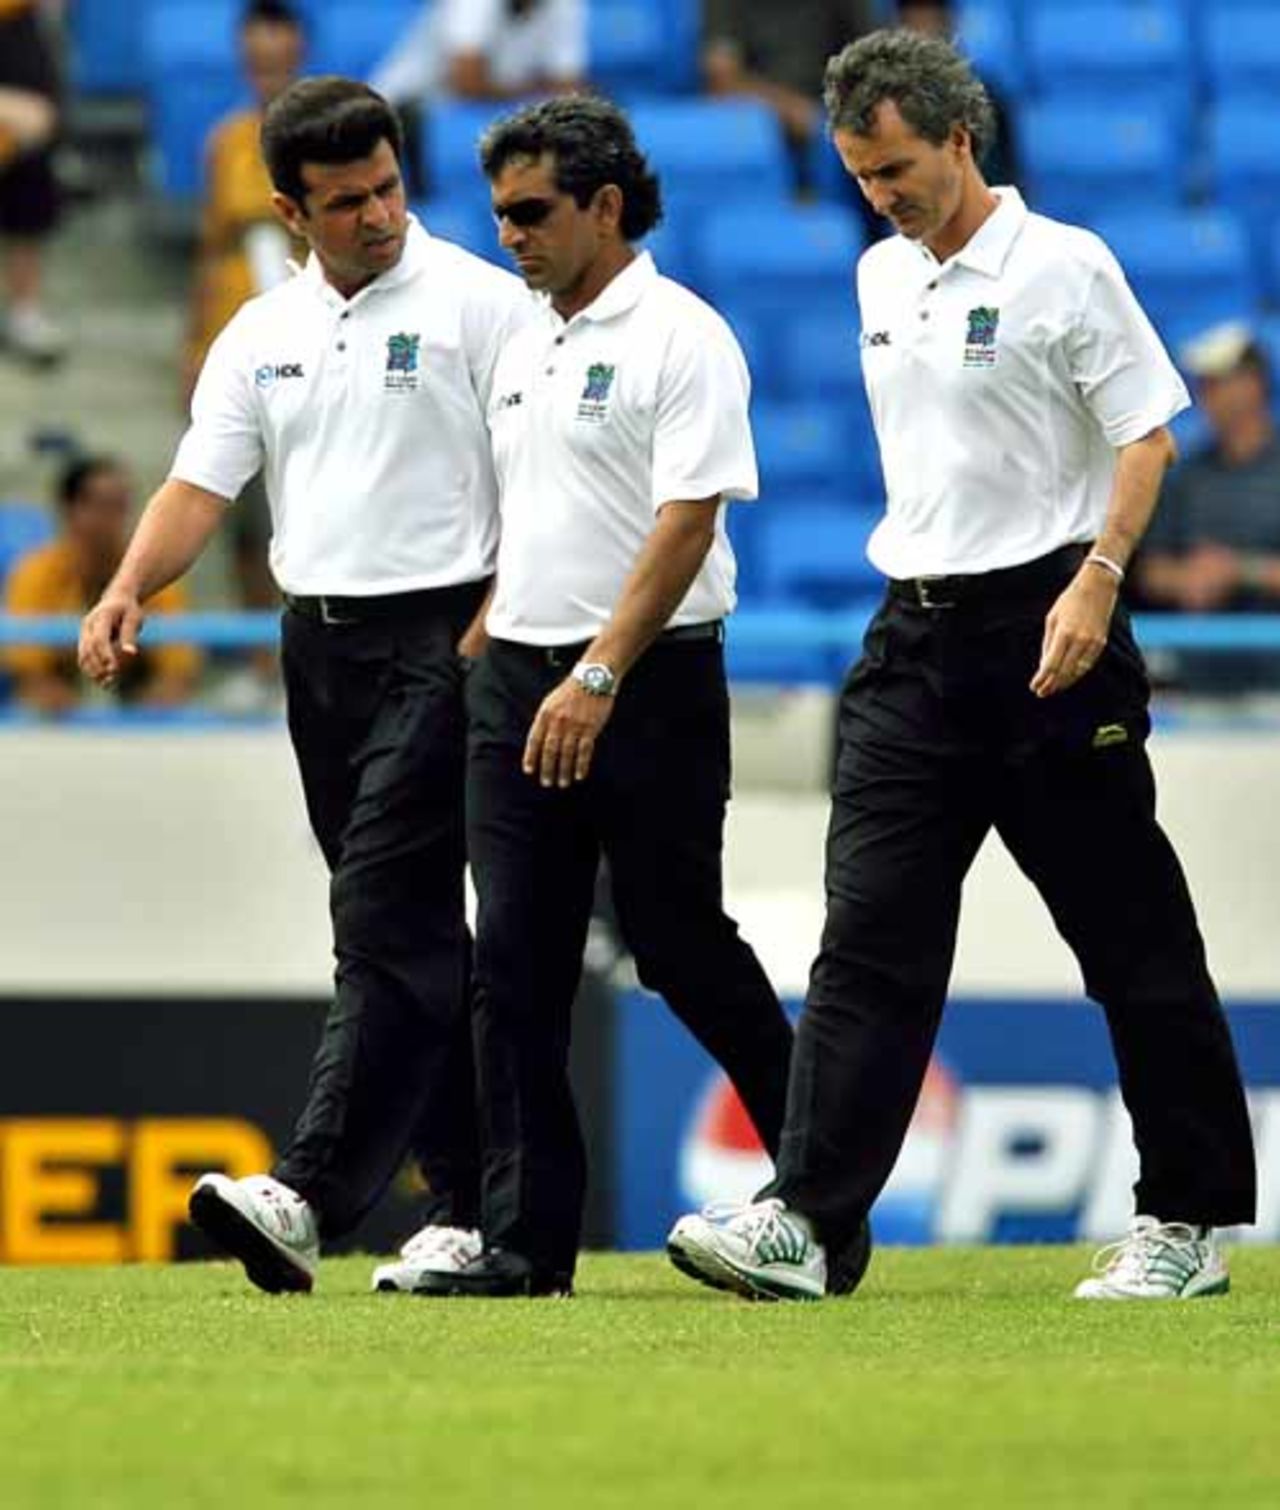 Umpires Aleem Dar, Asad Rauf and Billy Bowden walk down to inspect the pitch, Australia v Bangladesh, Super Eights, Antigua, March 31, 2007